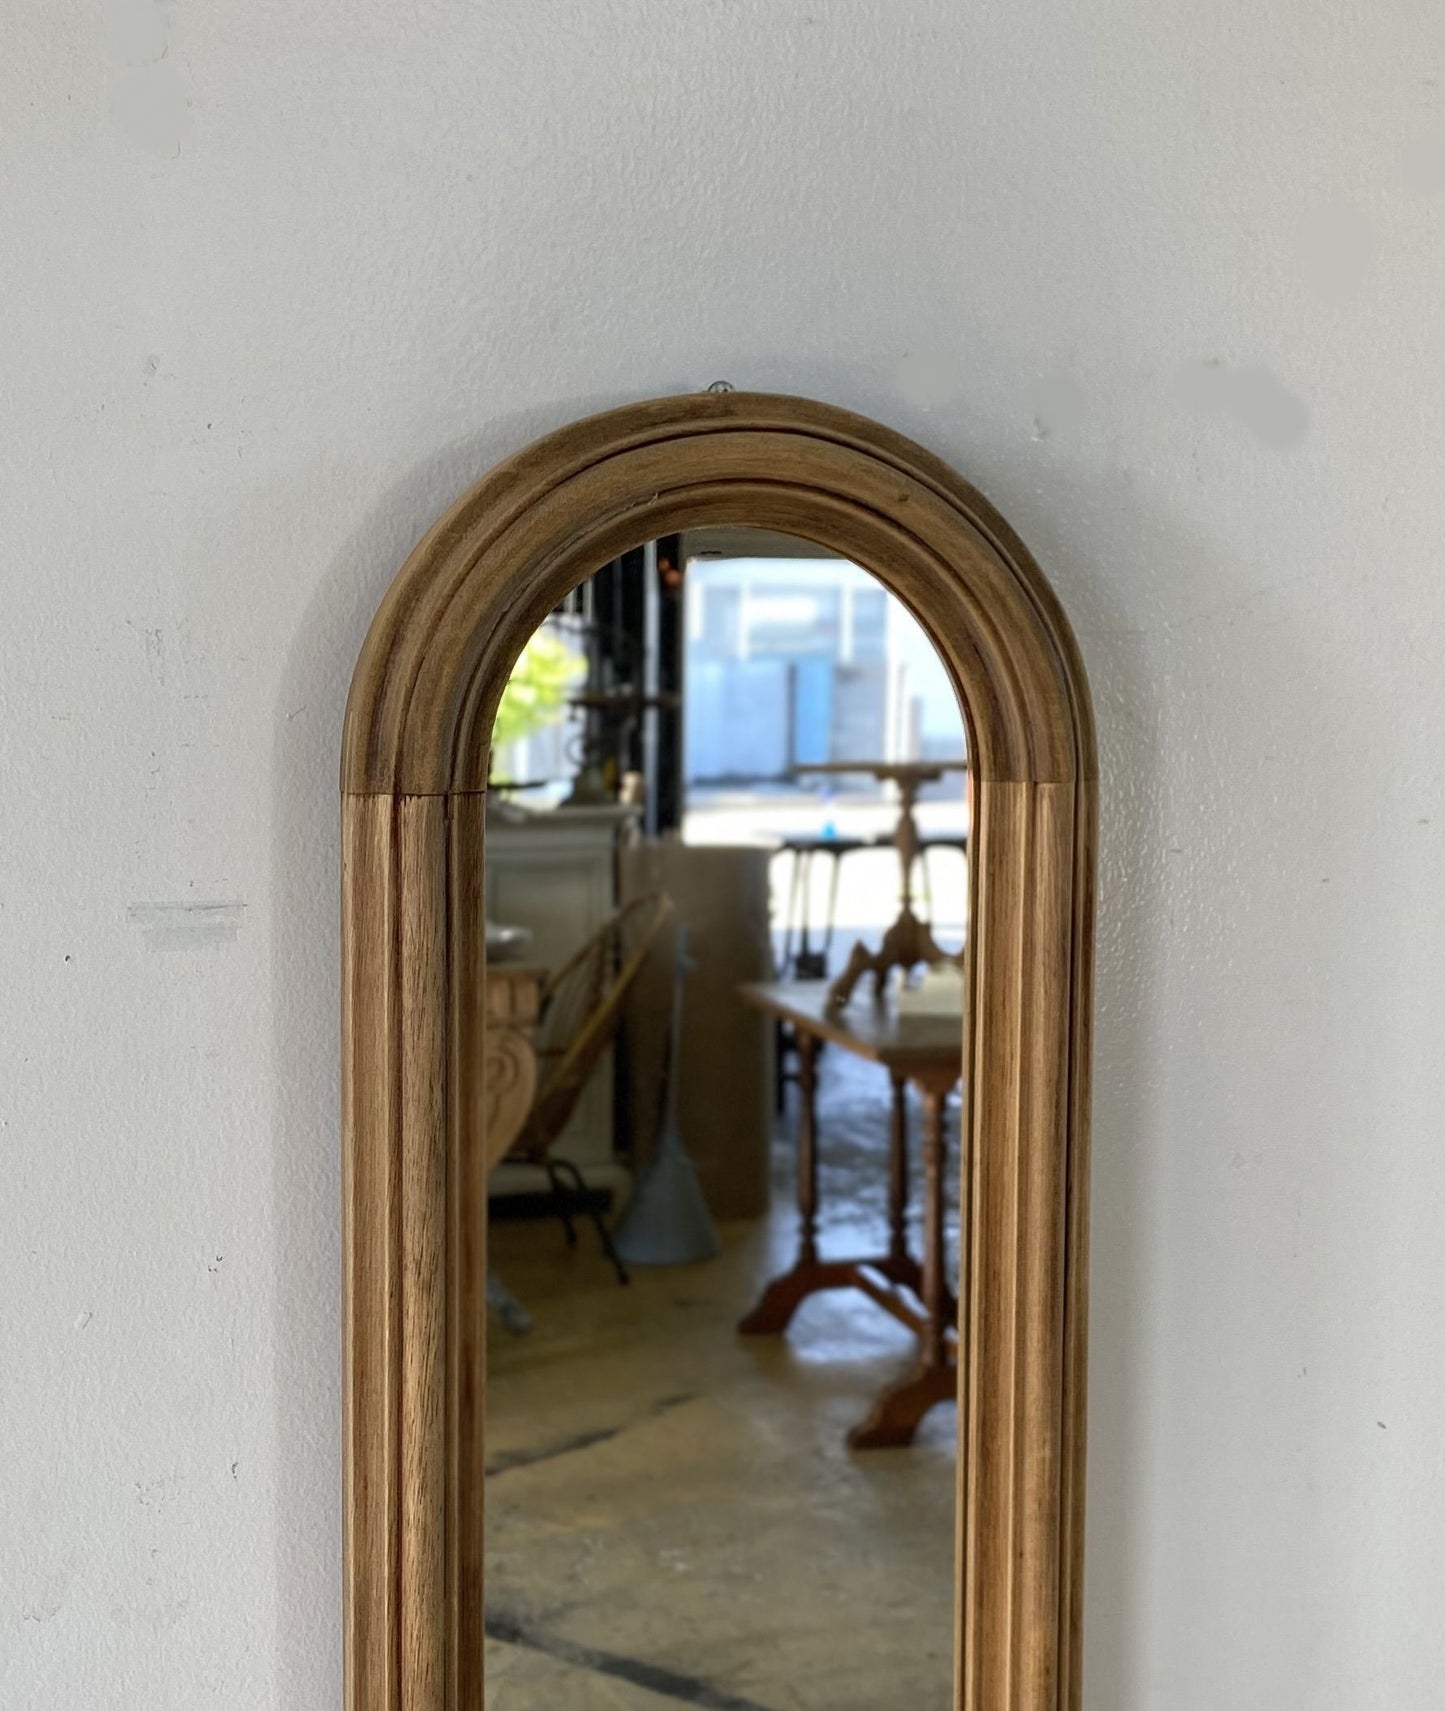 Arch Mirror